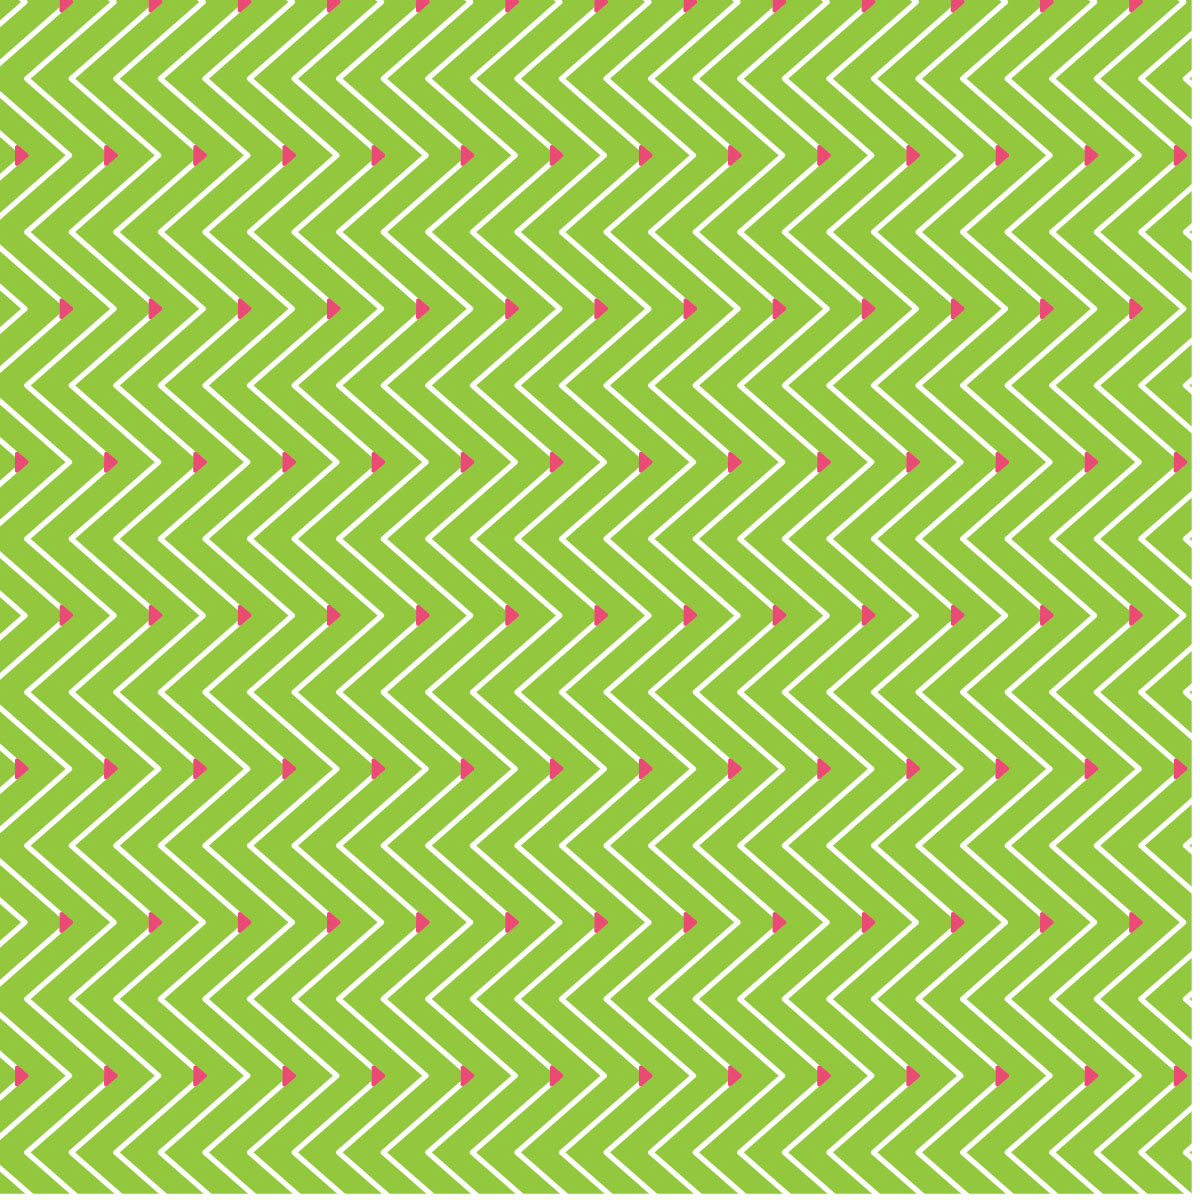 hexagon tarts pink green texture pattern